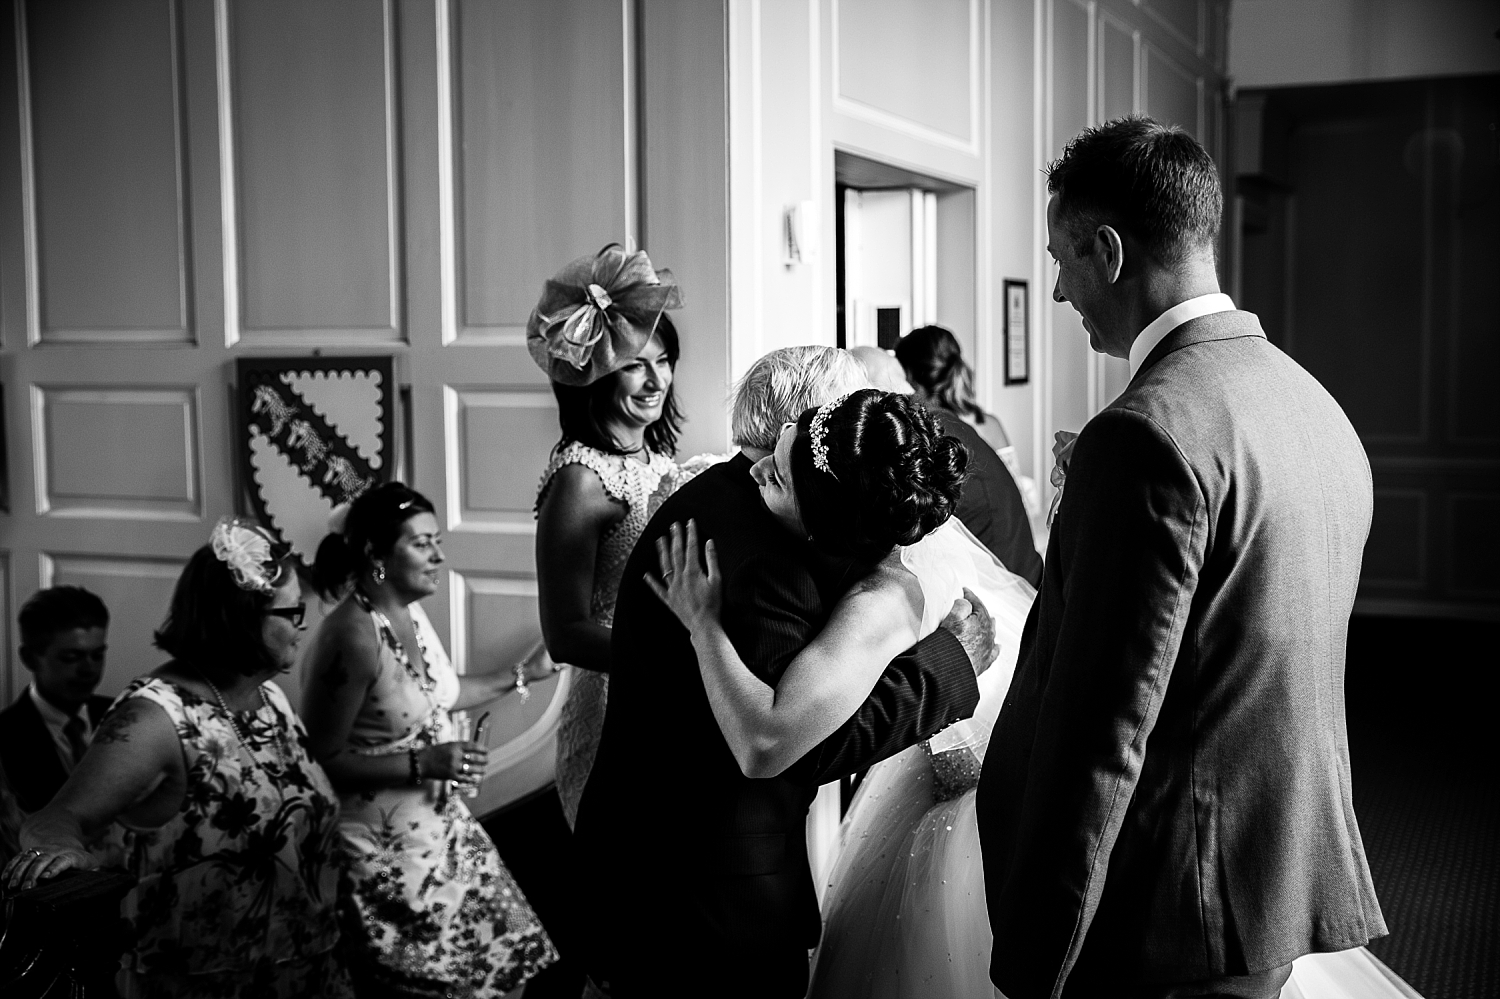 Gosfield Hall Wedding Photographer - Anesta Broad Photography - Wedding Reception